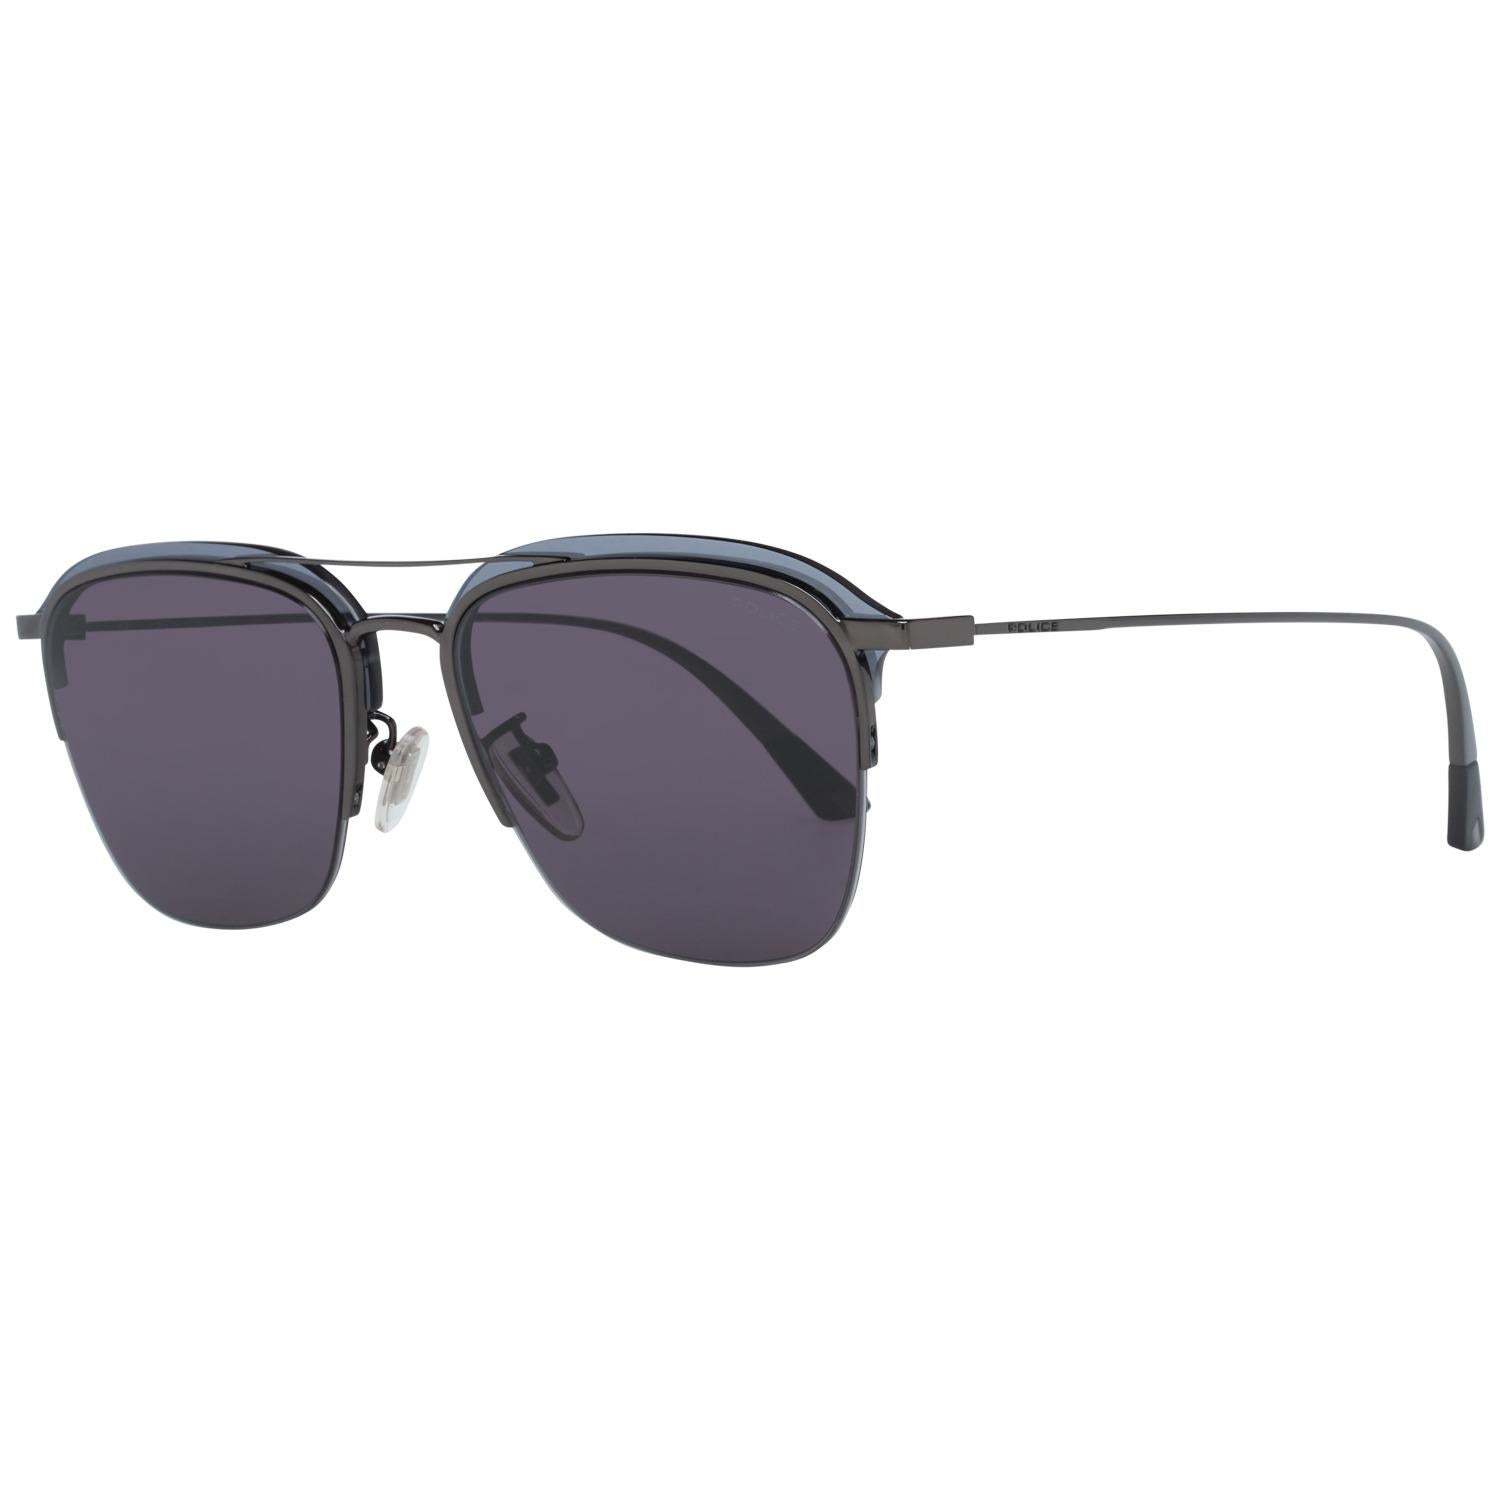 Police Mint Unisex Gray Sunglasses SPL783 540568 54-18-140 mm 2